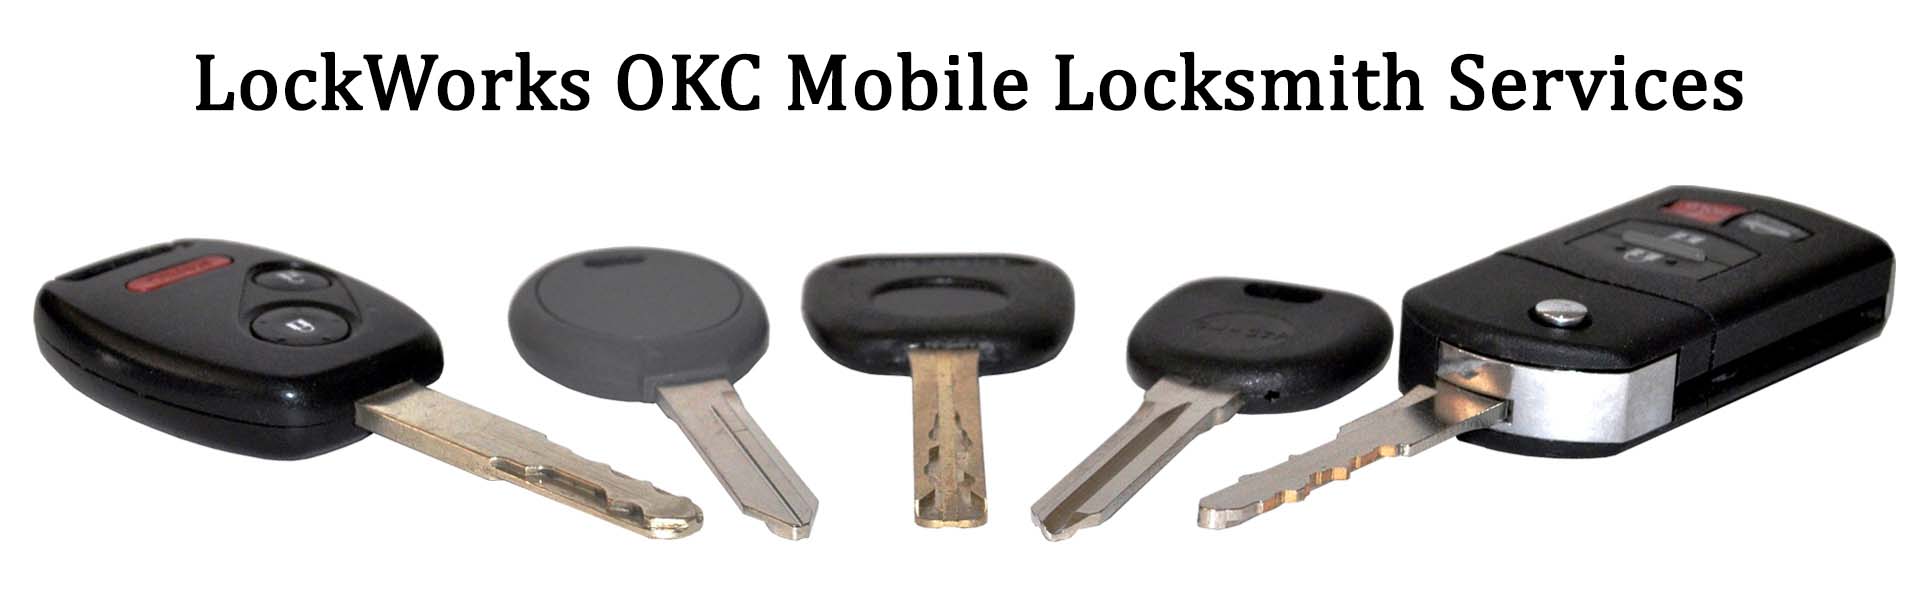 LockWorks OKC Mobile Locksmith Services